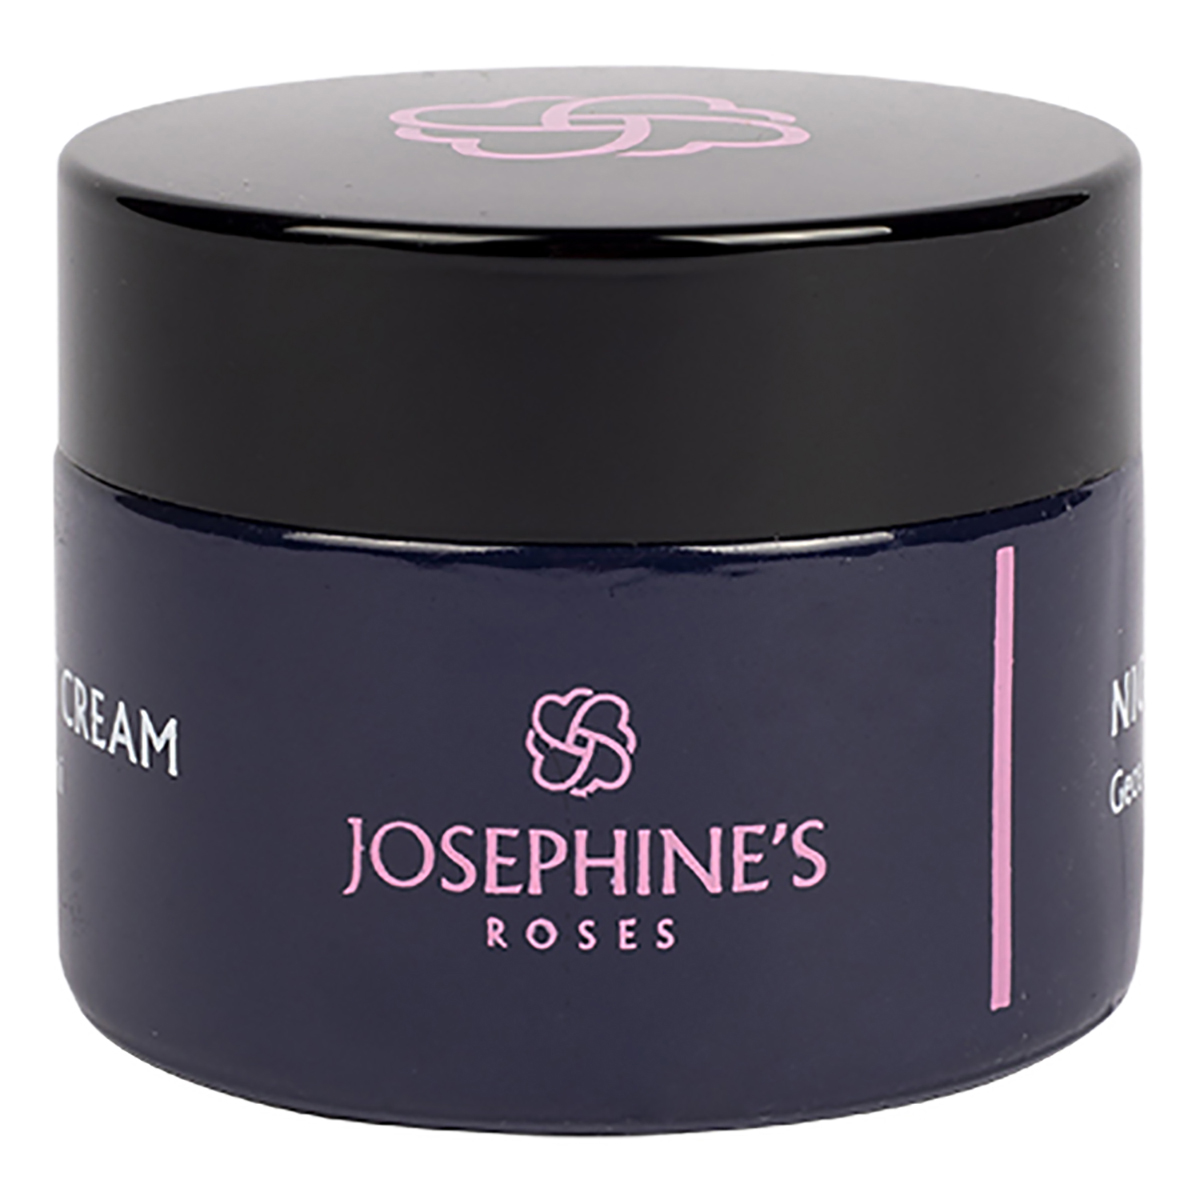 Josephine’s roses collagen mask with vitamin c